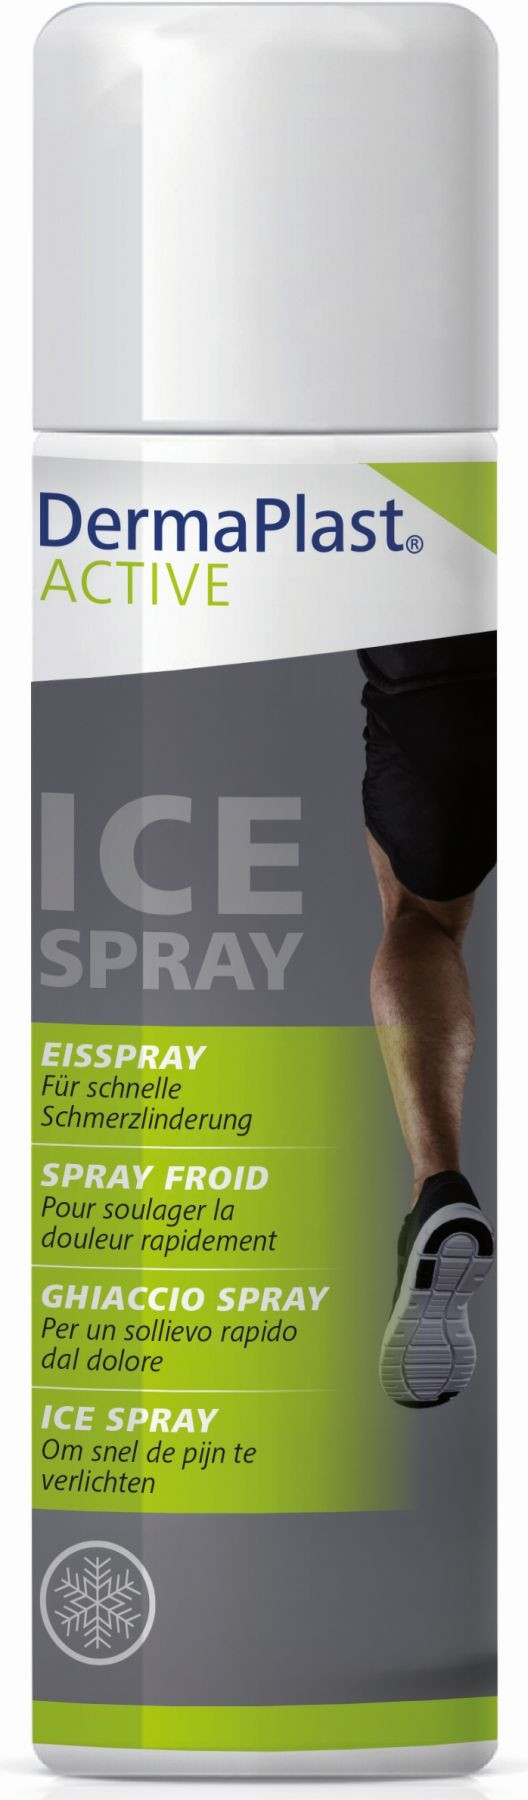 Image of Dermaplast Active Ice Spray (200ml)